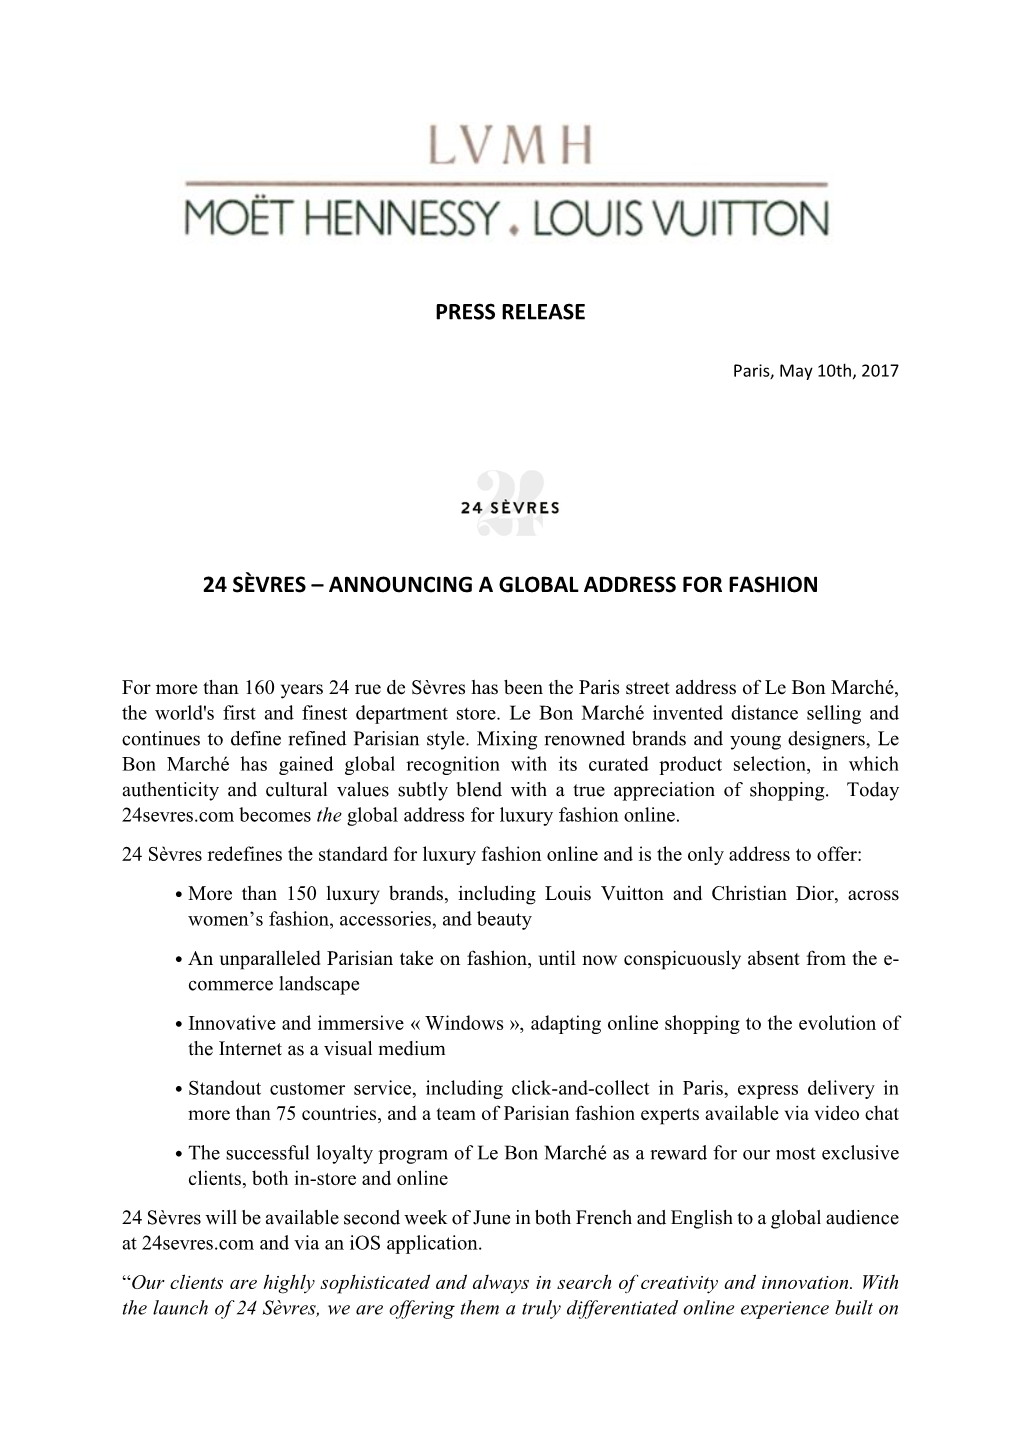 Press Release 24 Sèvres